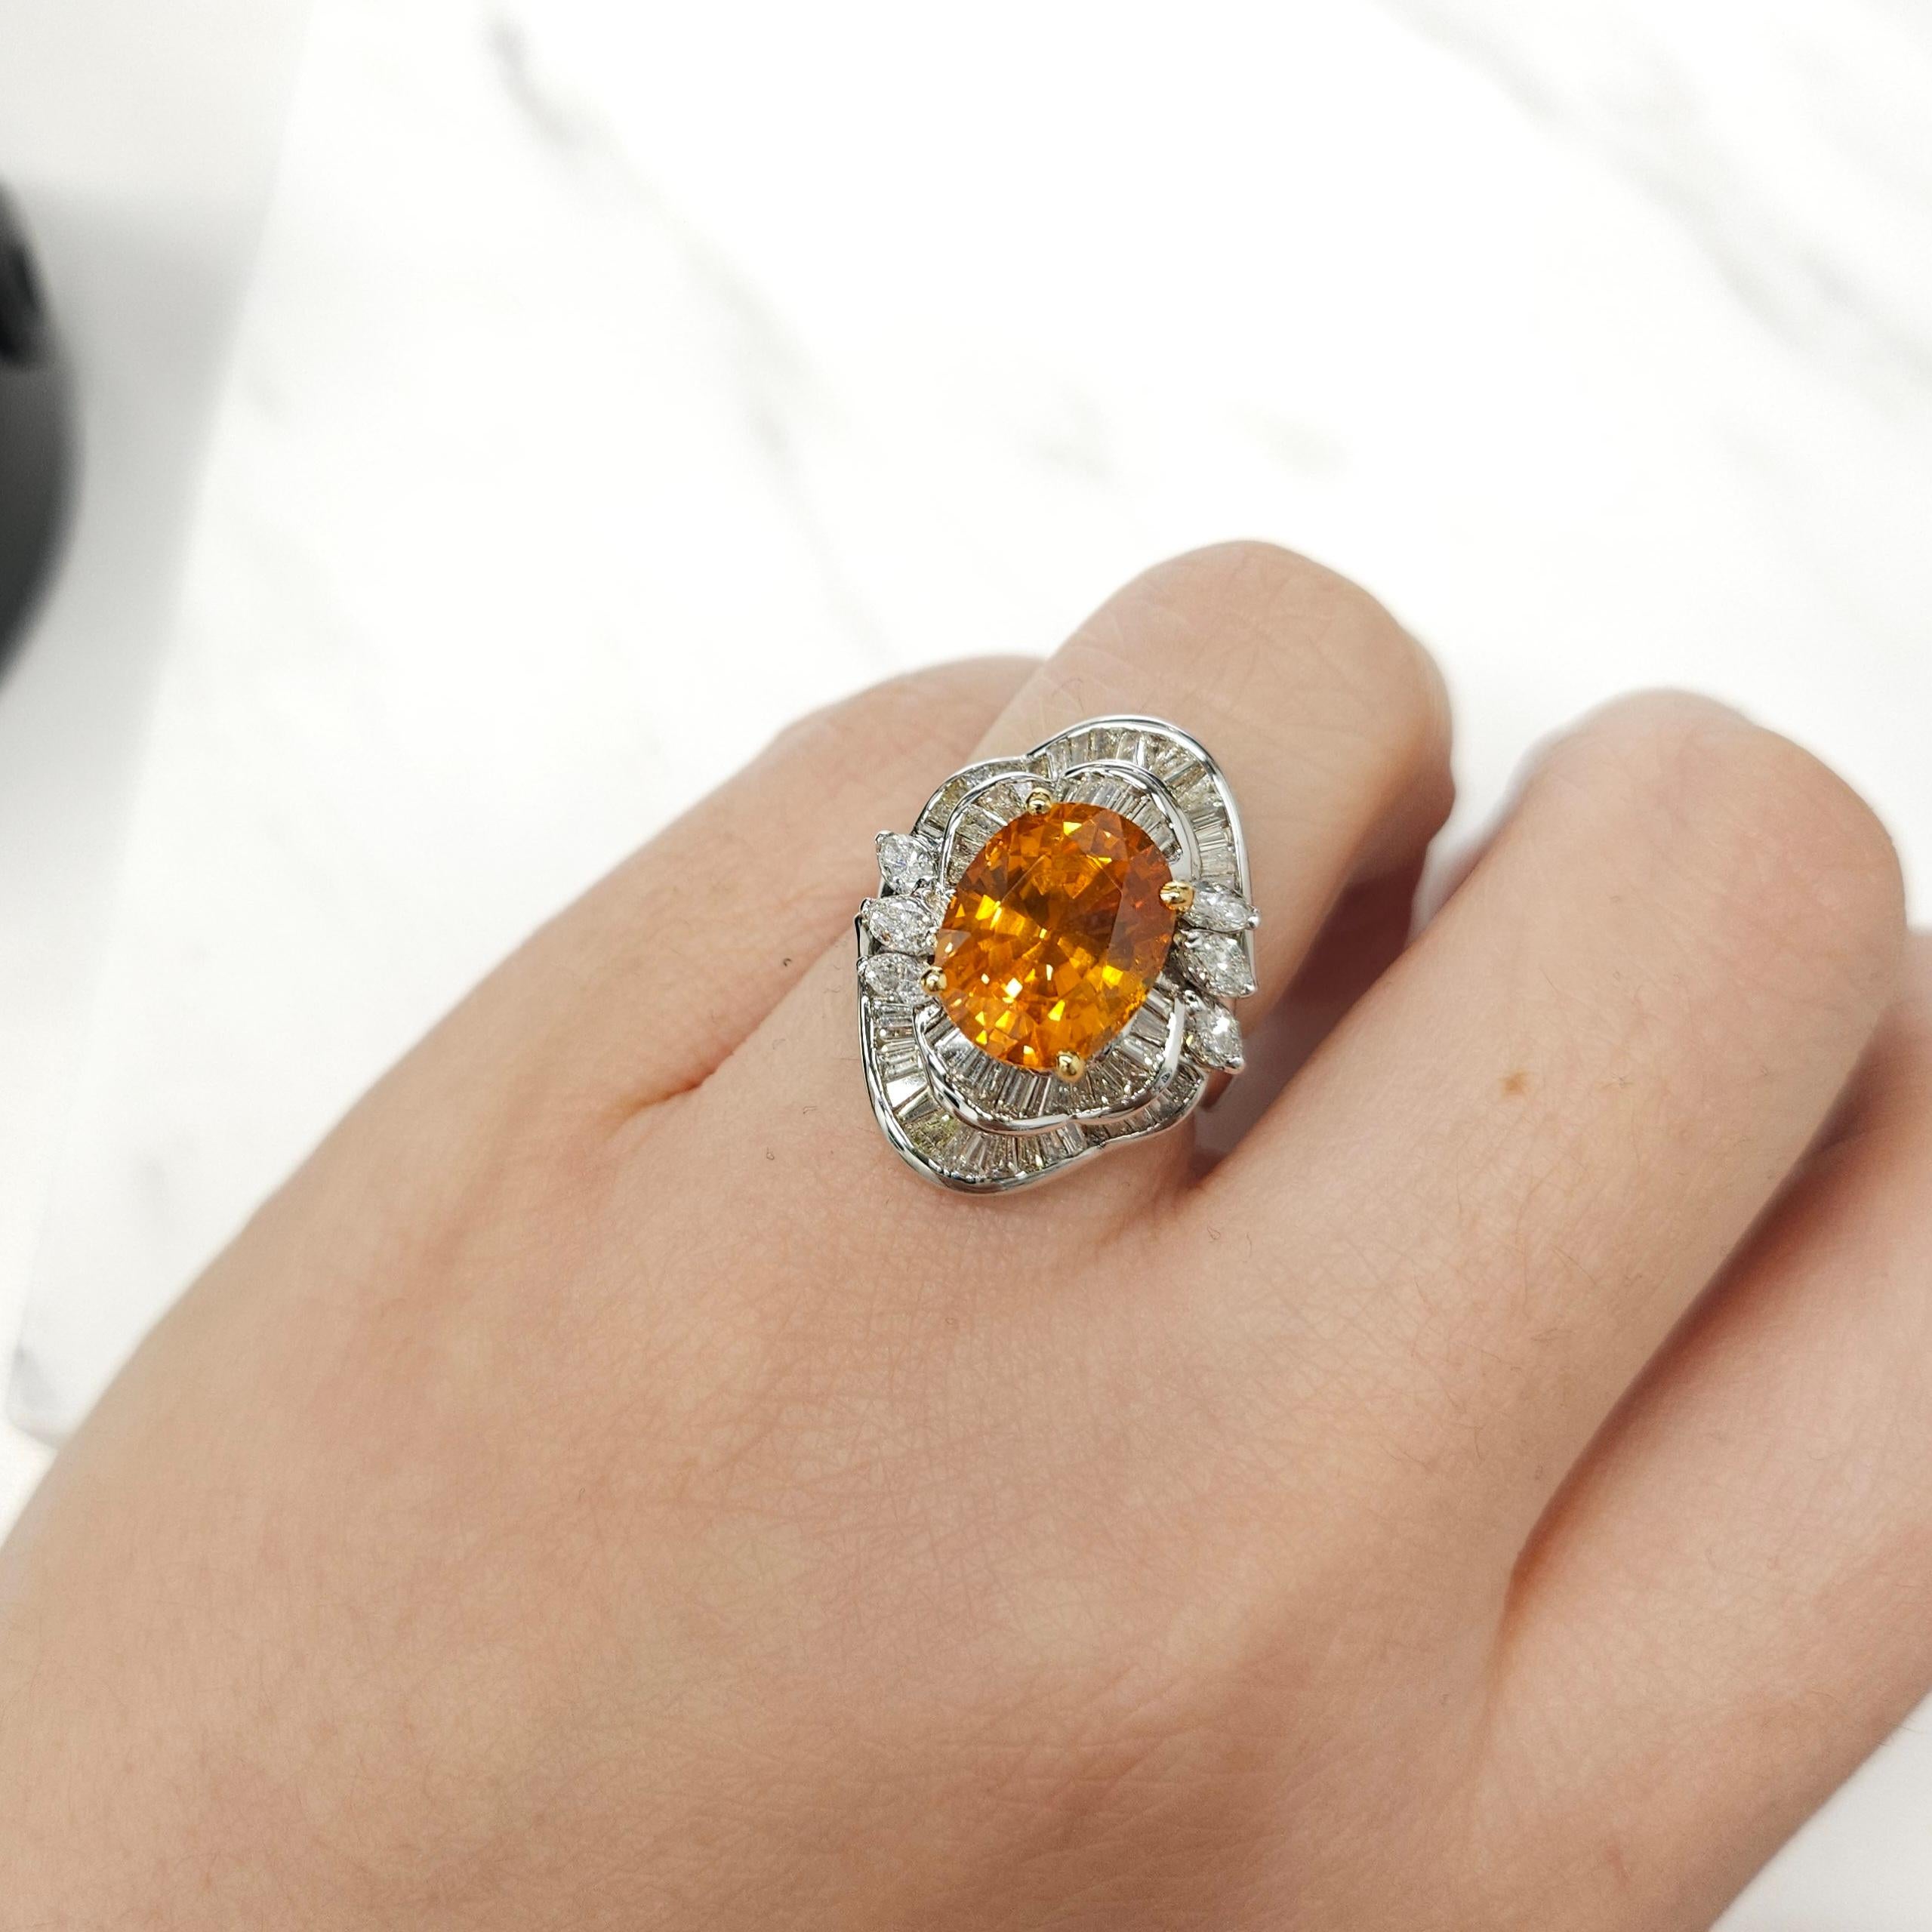 IGI Certified 6.08Carat Ceylon Orange Sapphire & Diamond Ring in 18K White Gold For Sale 1